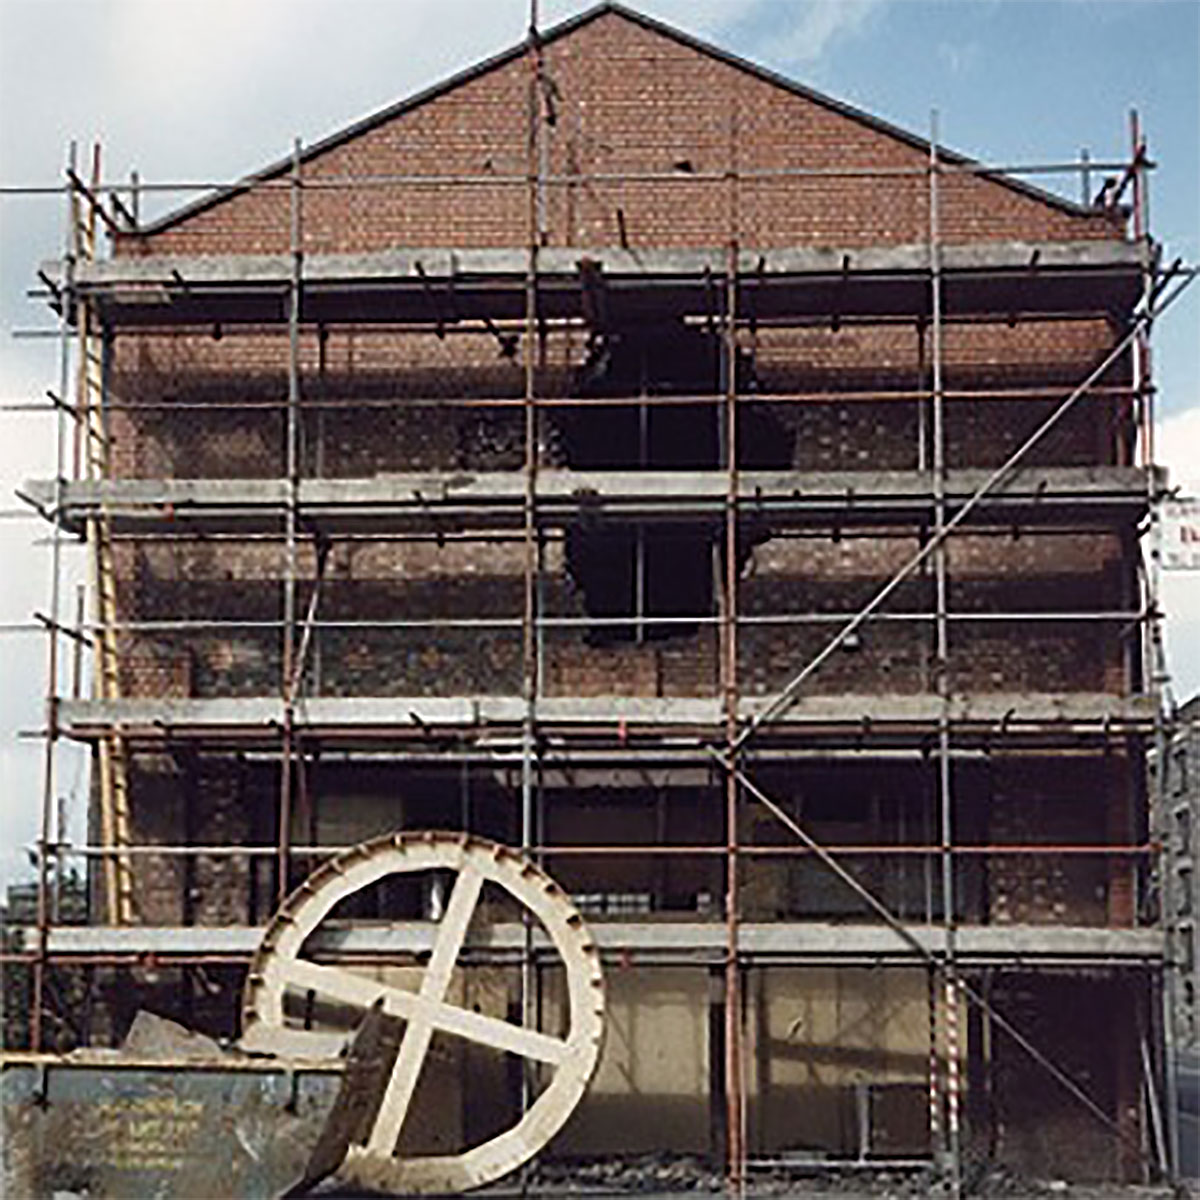 Mud Dock building renovation, 1993